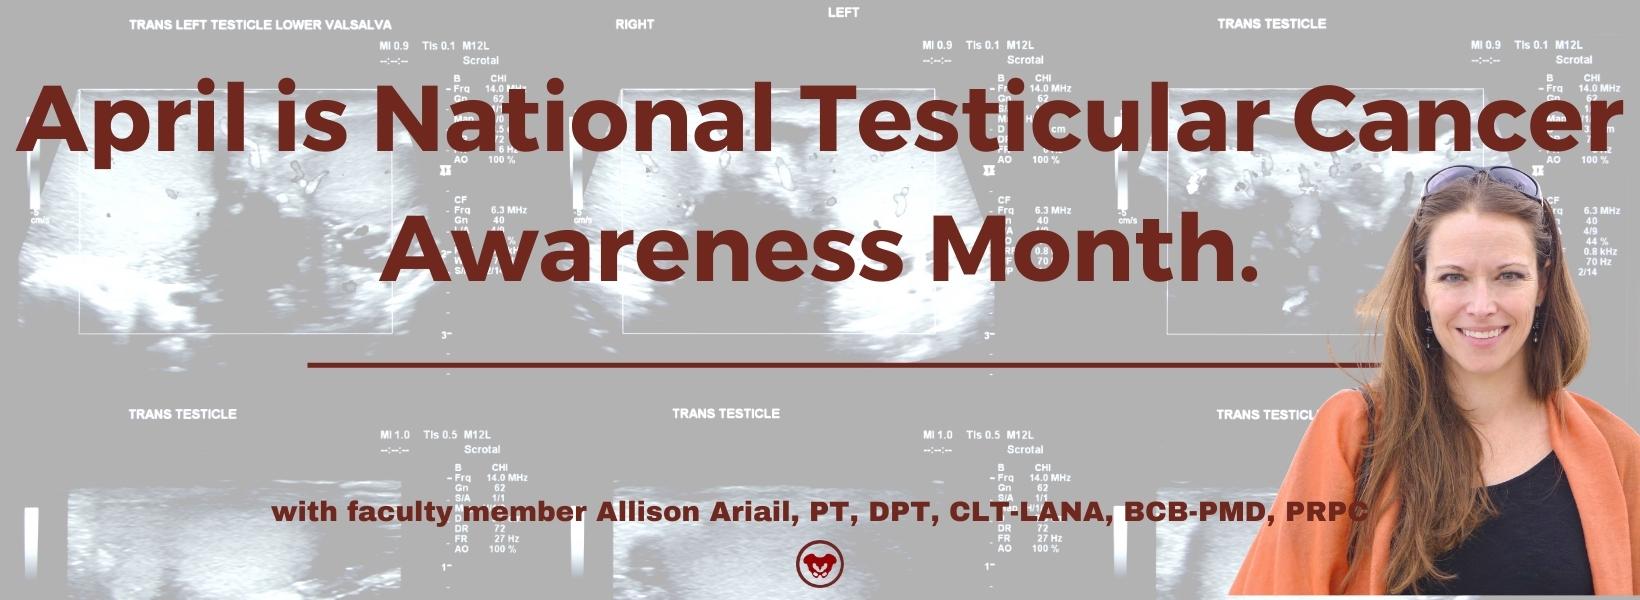 April is National Testicular Cancer Awareness Month